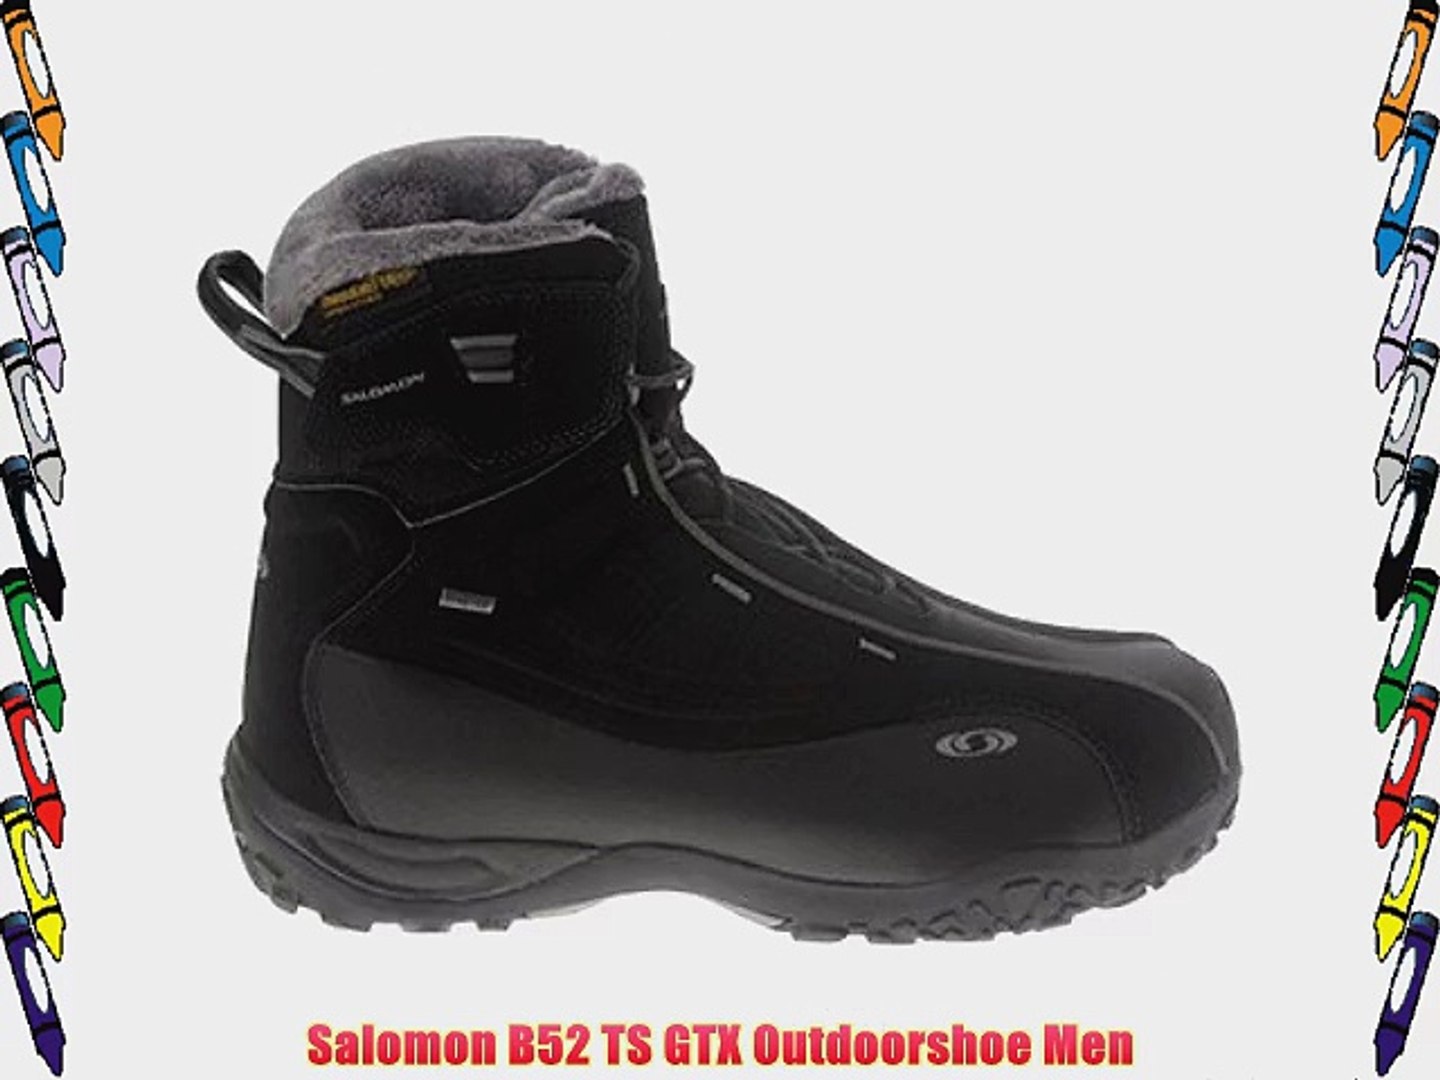 Salomon B52 TS GTX Outdoorshoe Men - video Dailymotion